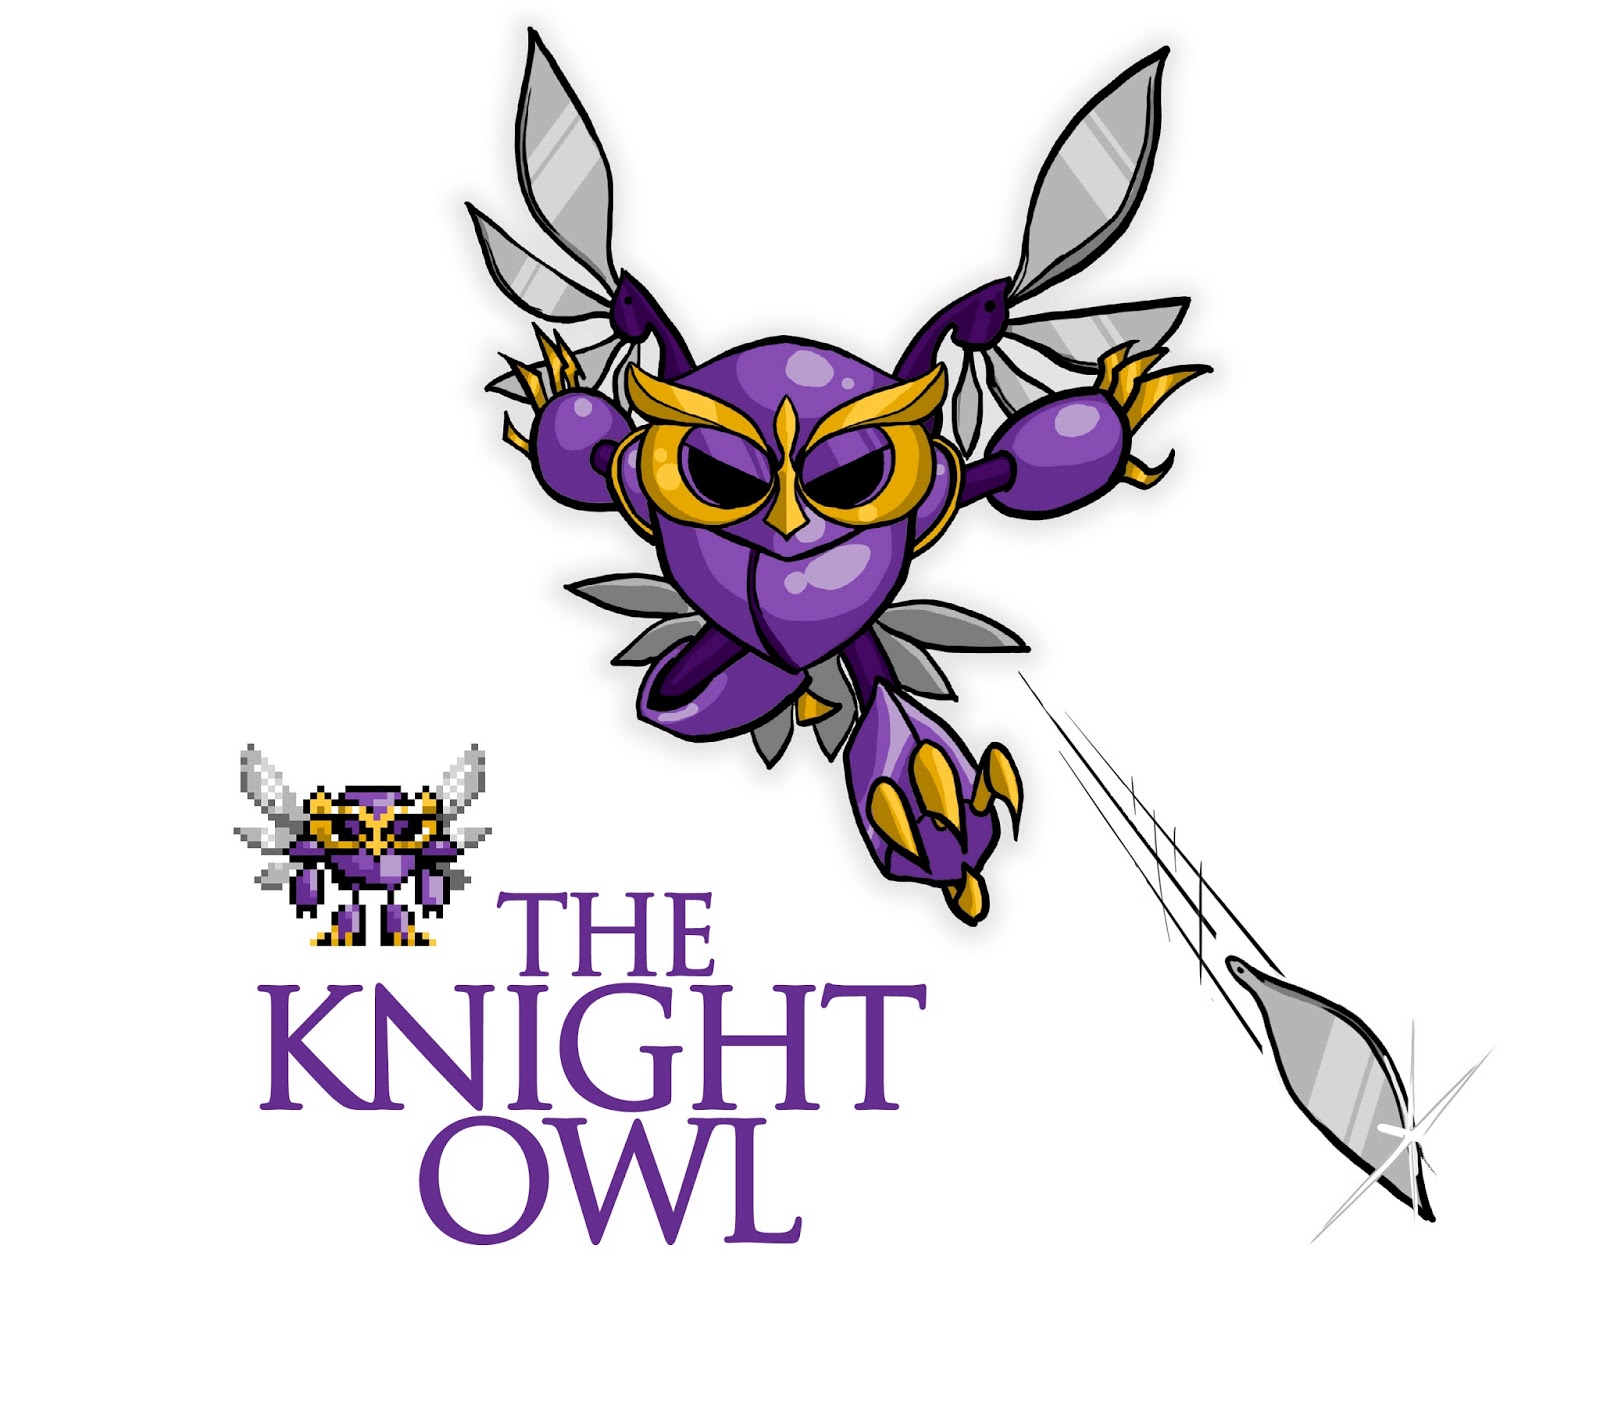 frakfraco.blog: Meet The Knight Owl